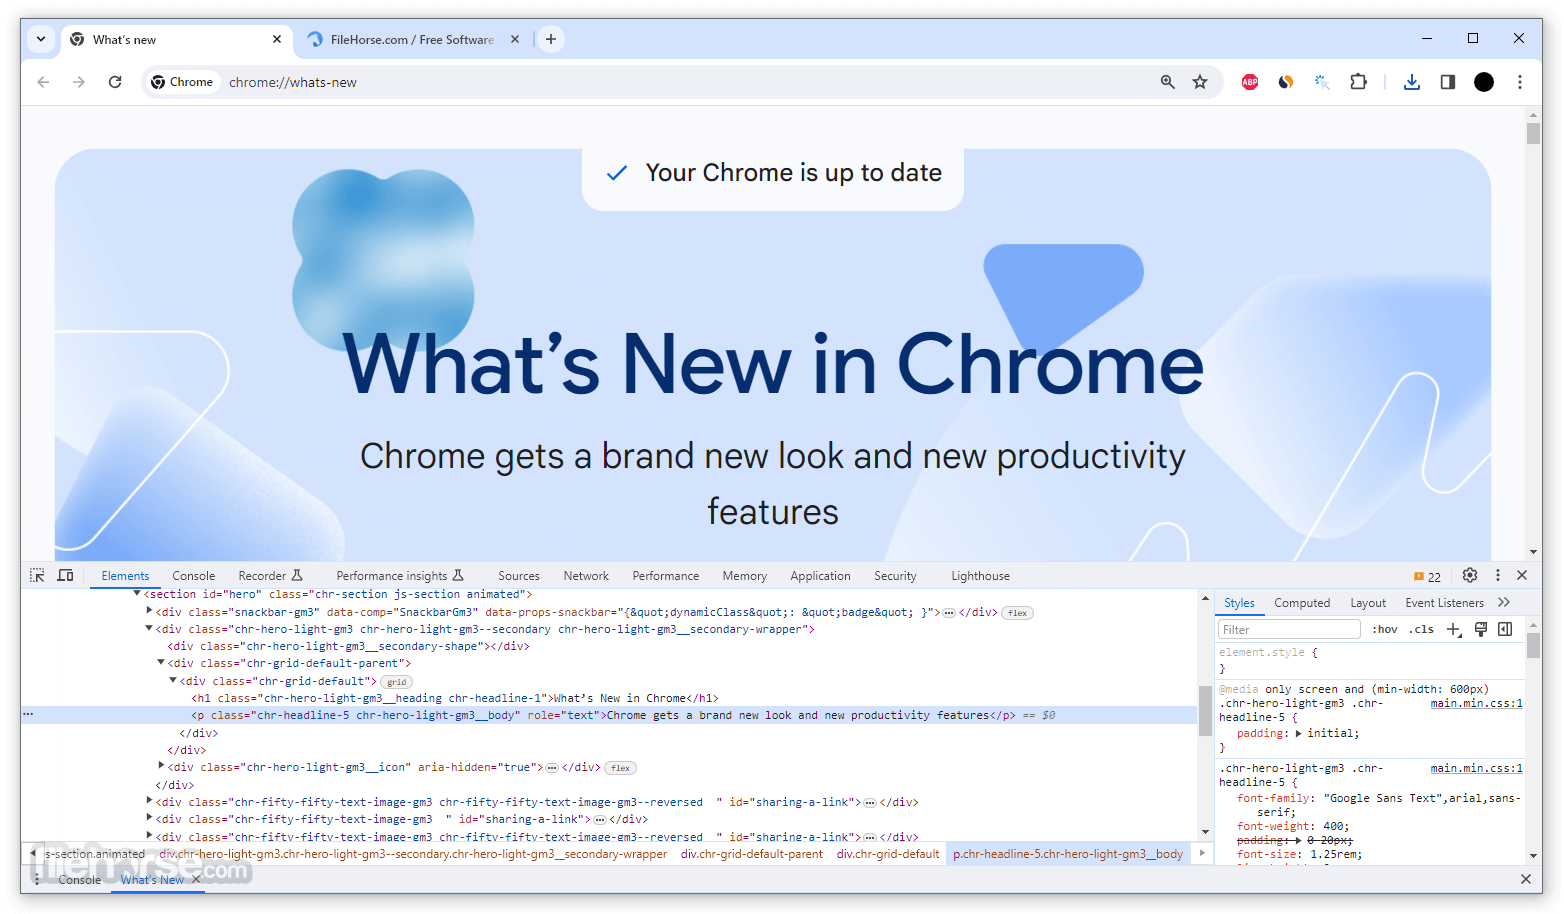 Google Chrome 63.0.3239.132 (32bit) Download for Windows